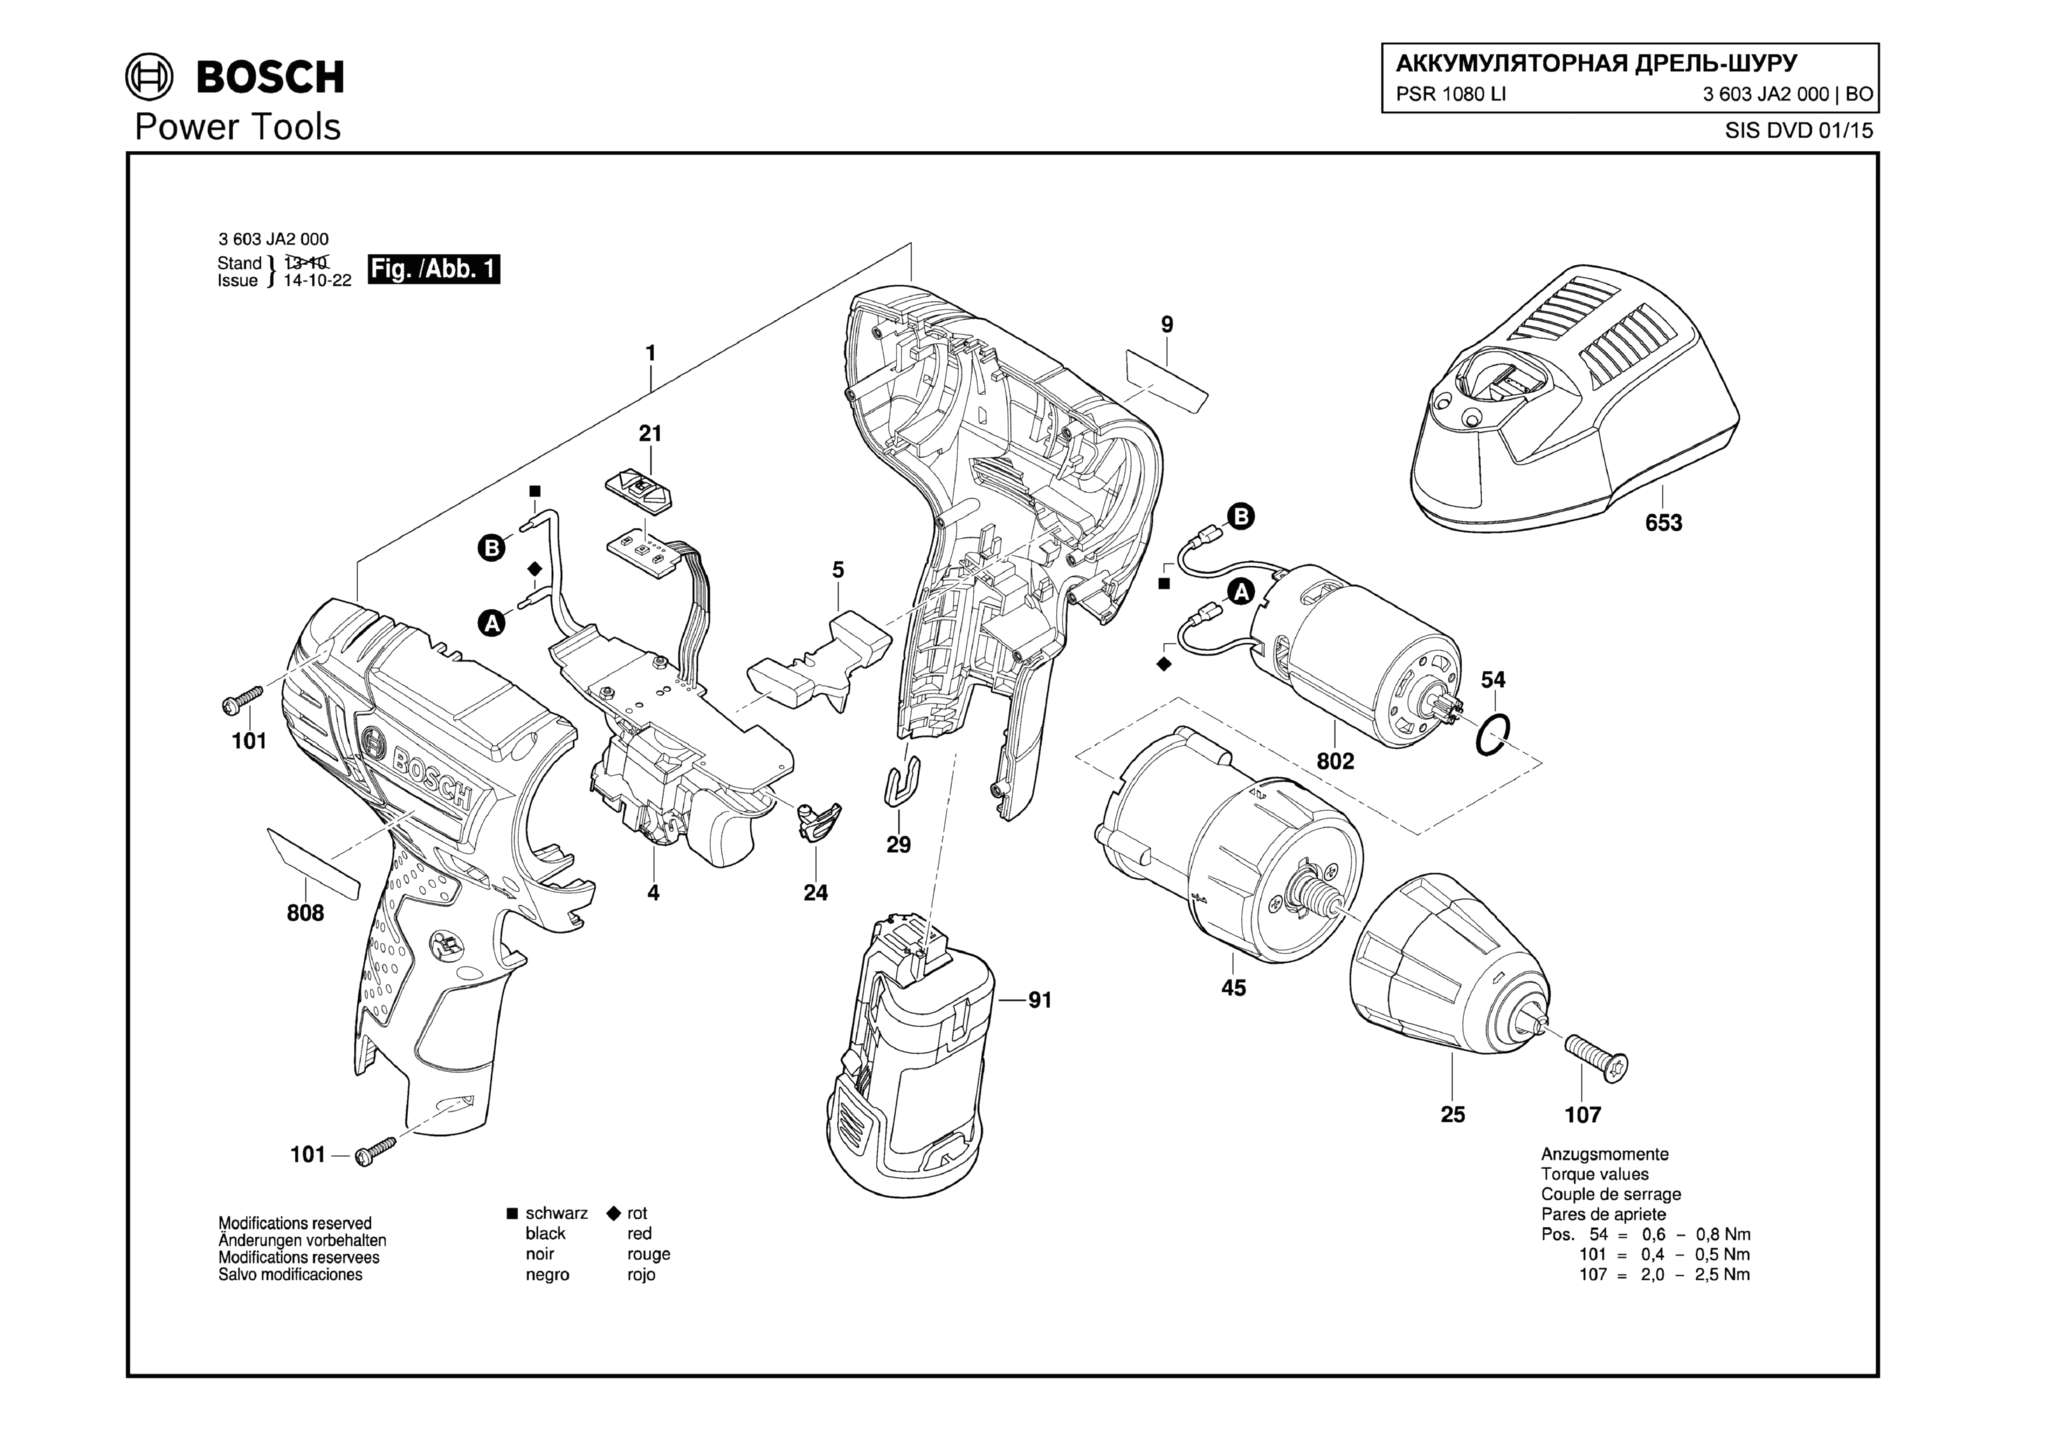 Запчасти, схема и деталировка Bosch PSR 1080 LI (ТИП 3603JA2000)